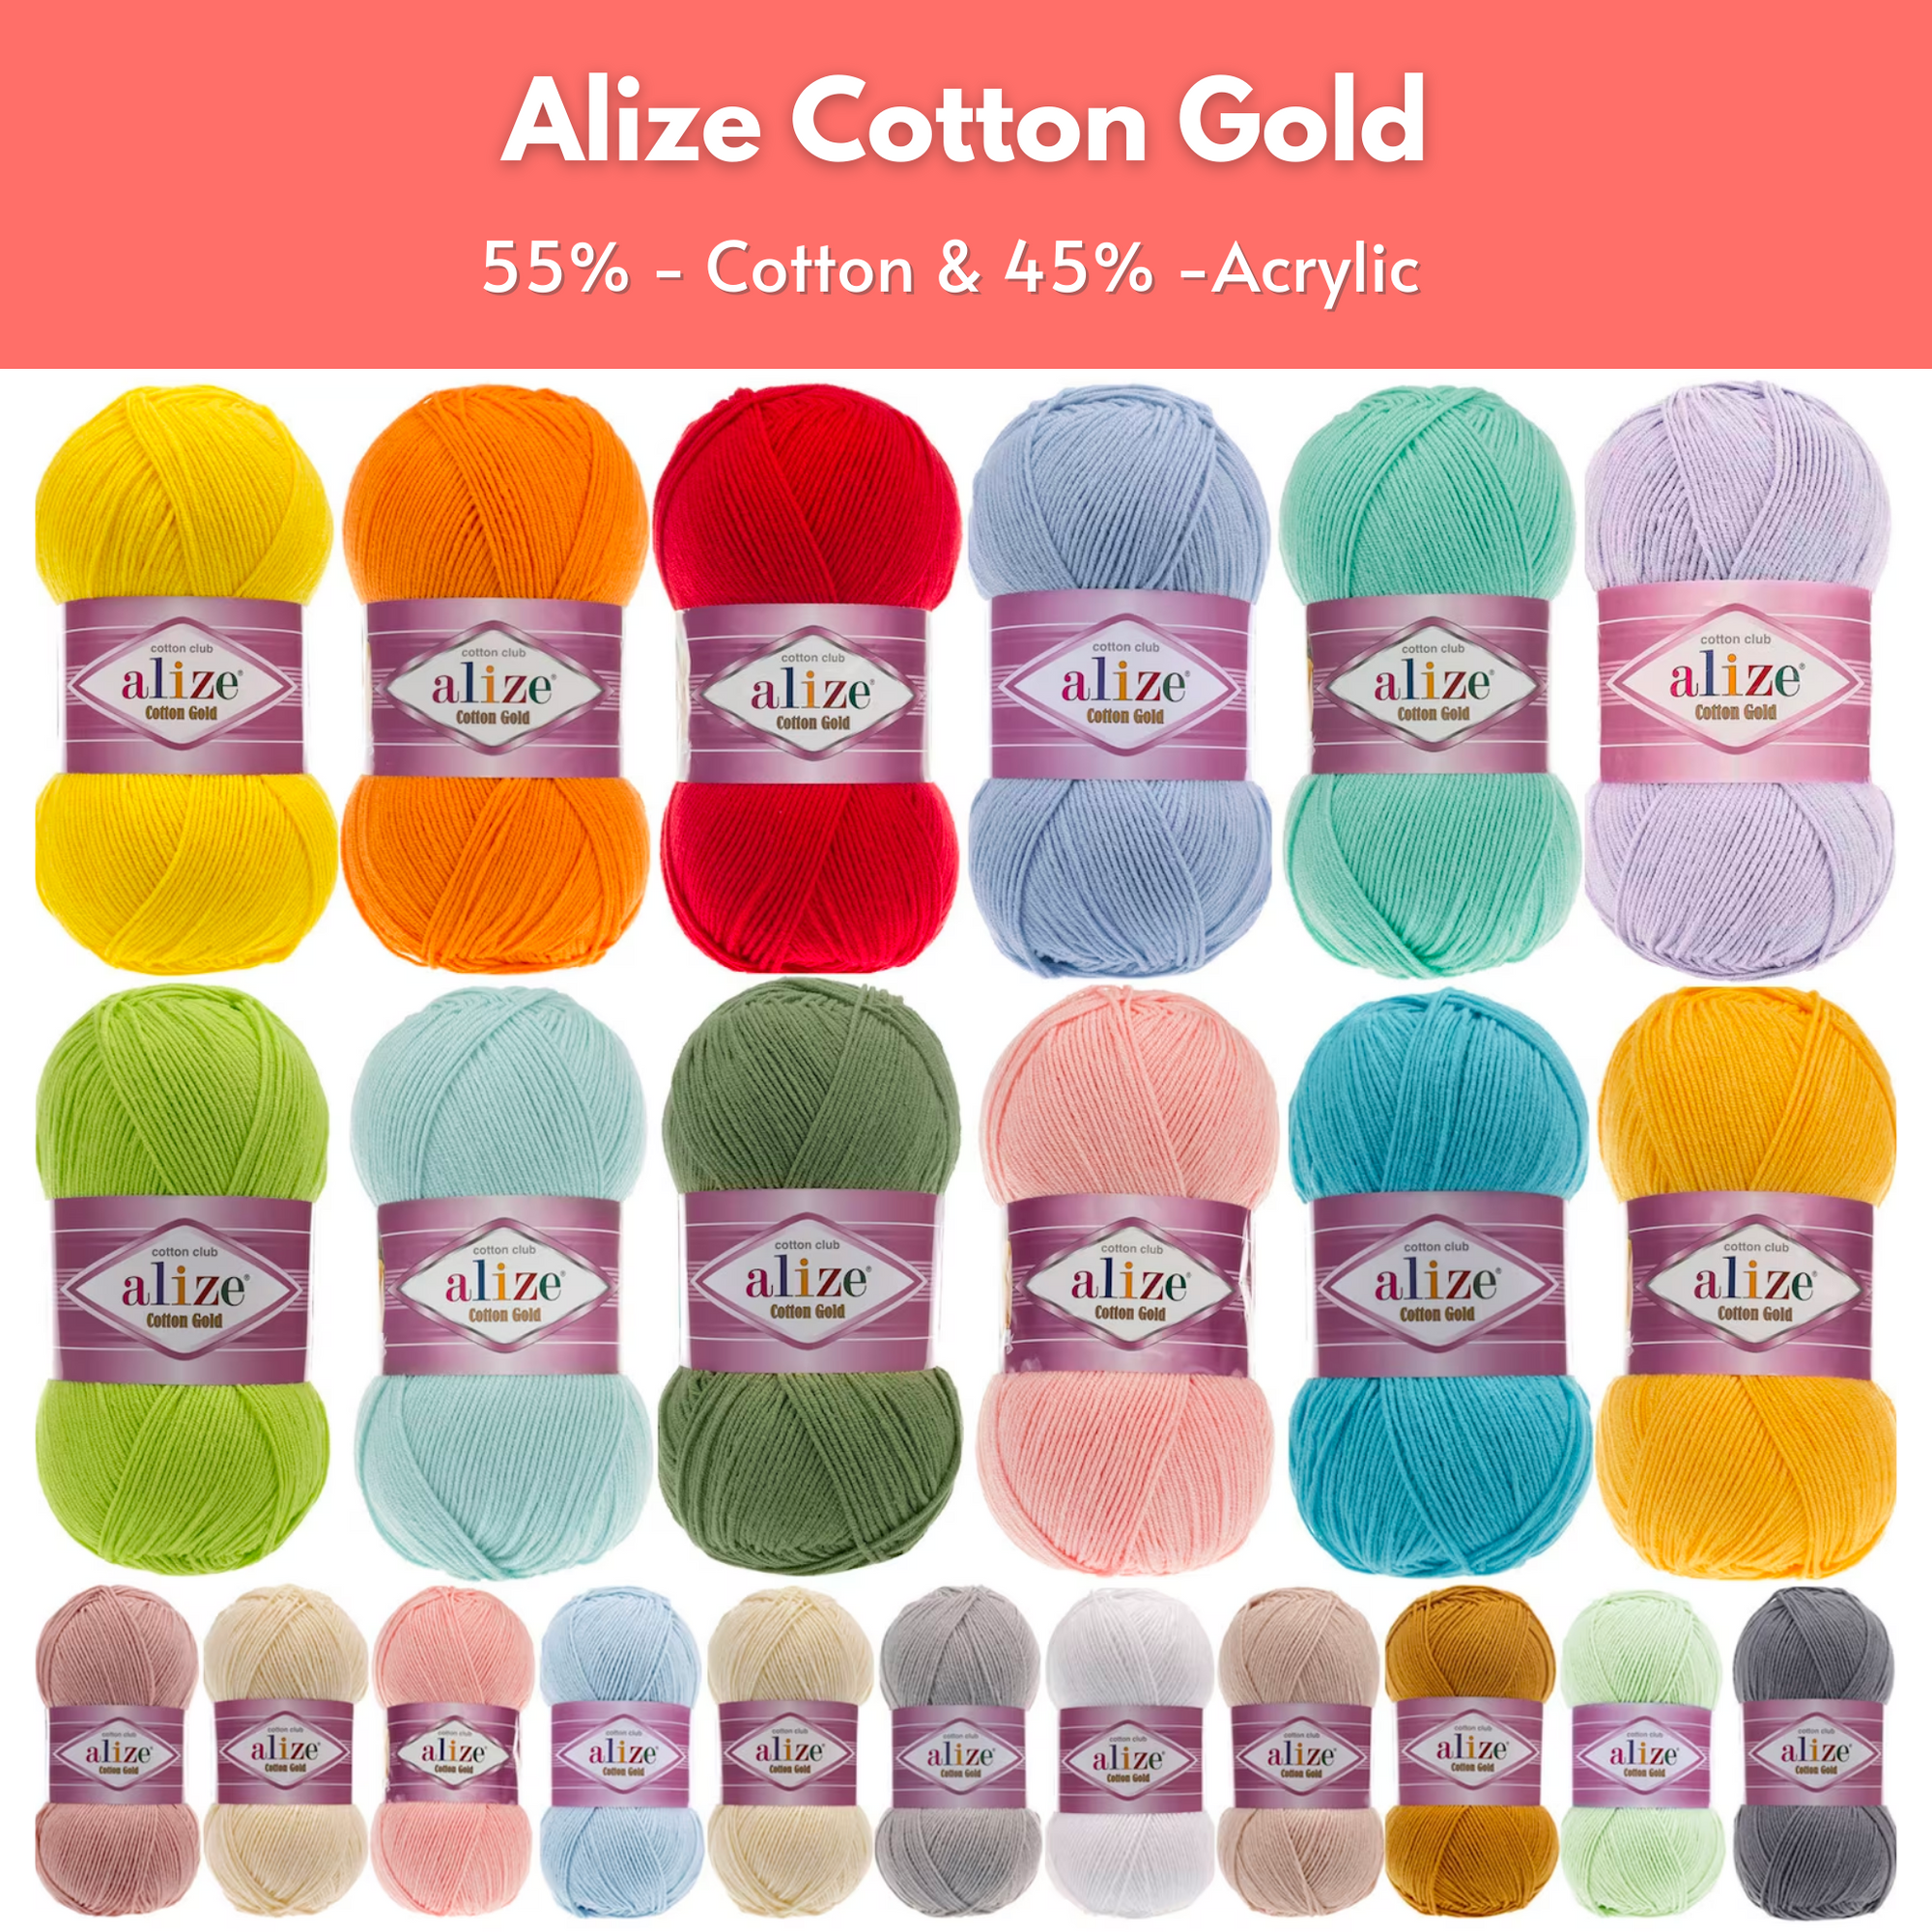 Alize Cotton Gold Knitting Yarn, Powder Pink - 393